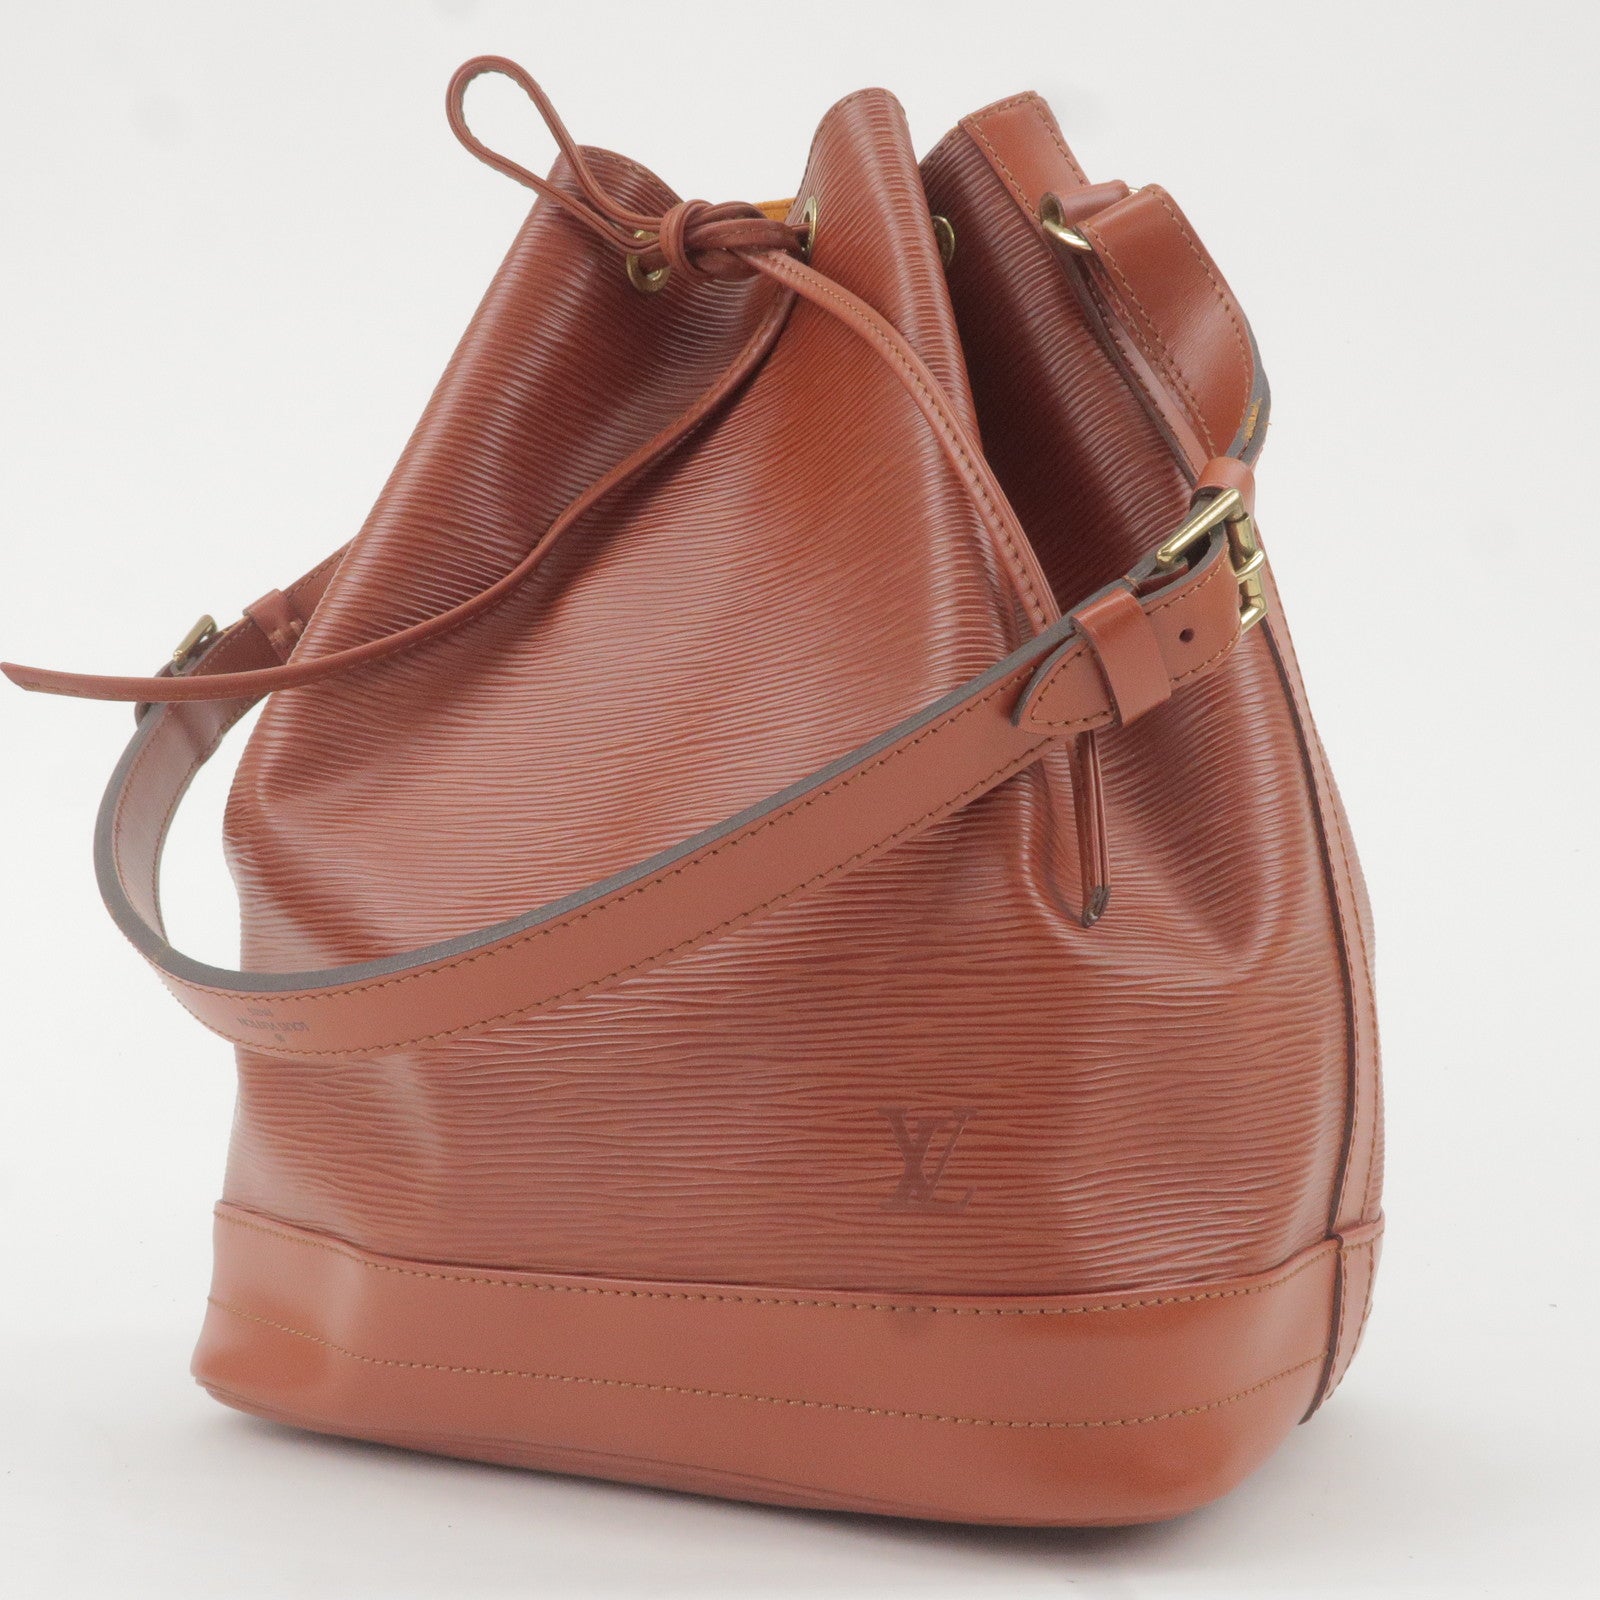 Fashion Louis Vuitton Collection: Louis Vuitton Epi Noe bag with